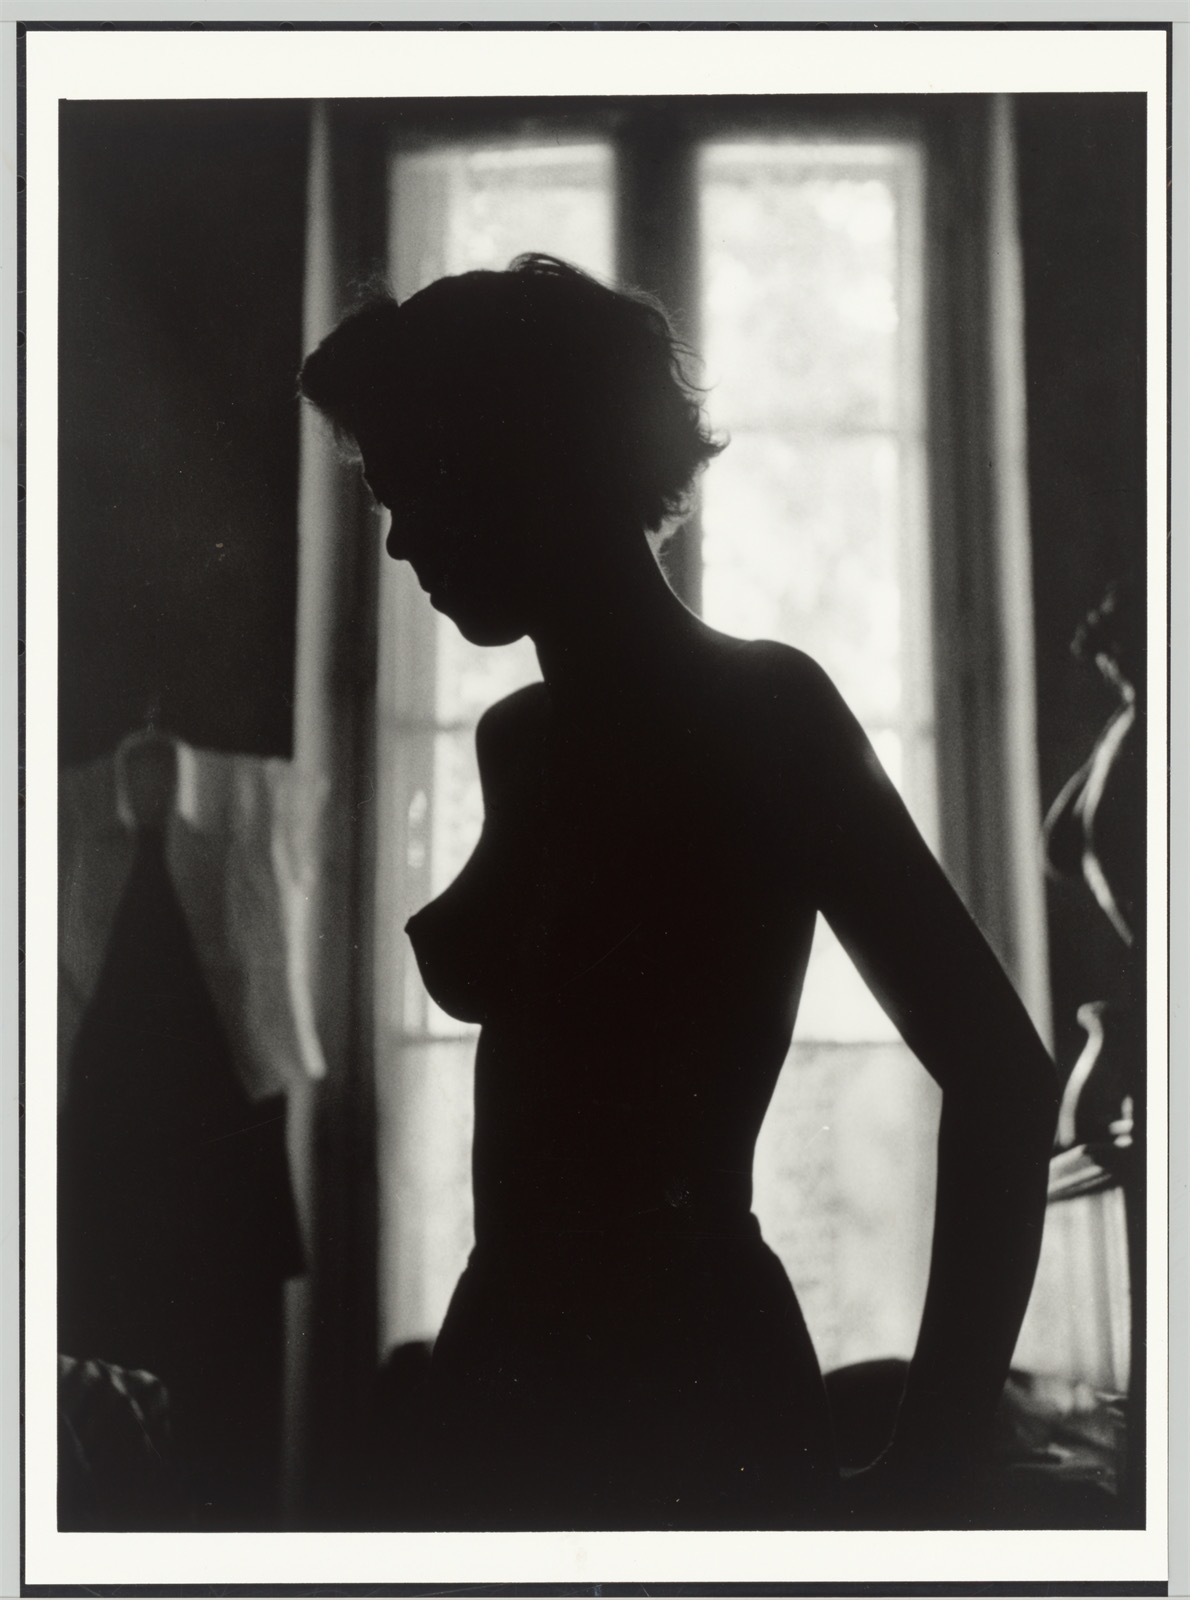 René Groebli. # 526, from the series ”Das Auge der Liebe”, Paris. 1952 - Image 2 of 4